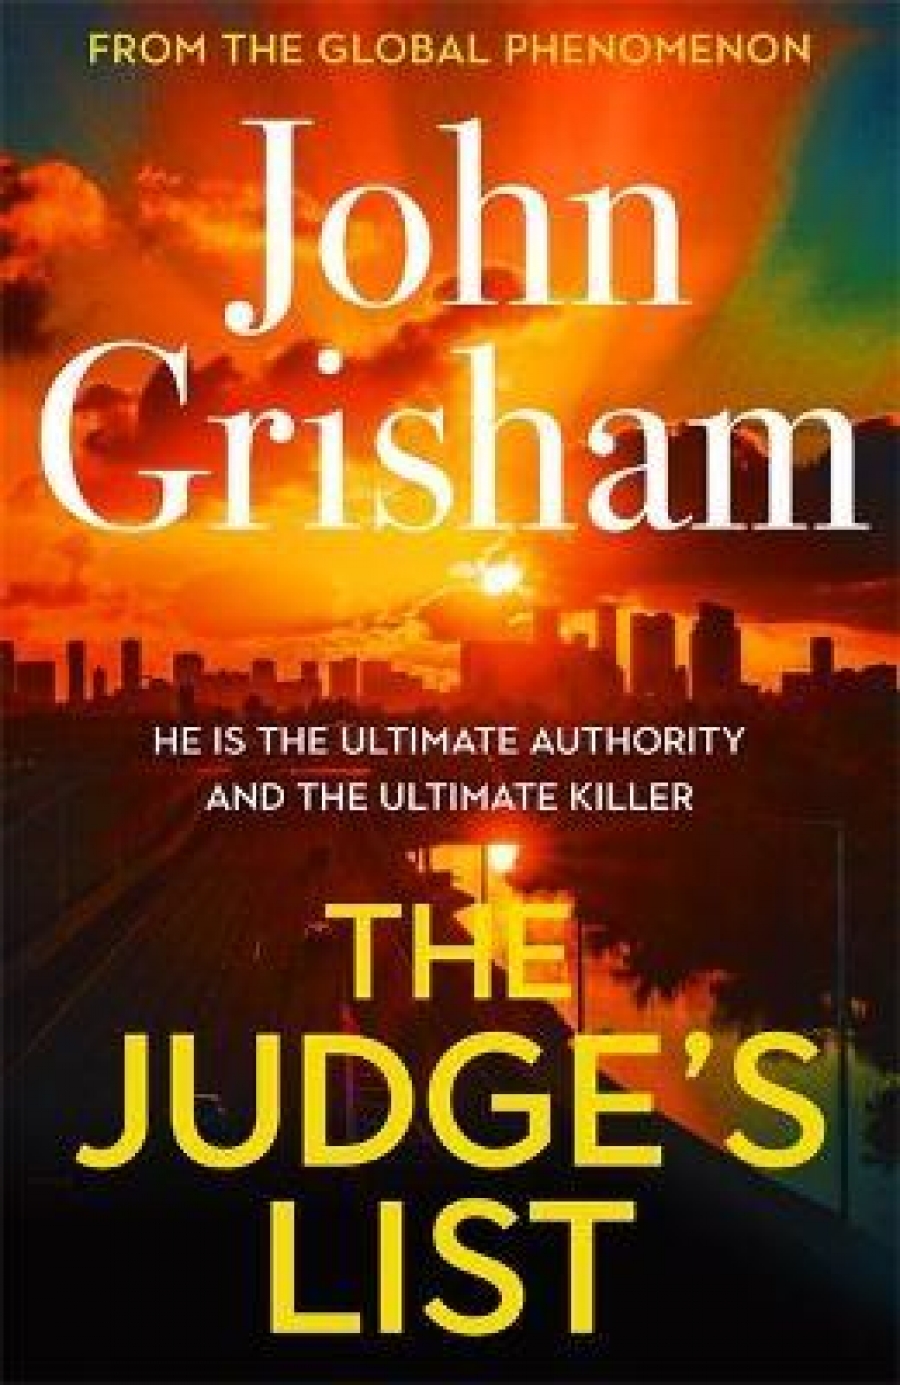 Grisham, John Judge's List, the 